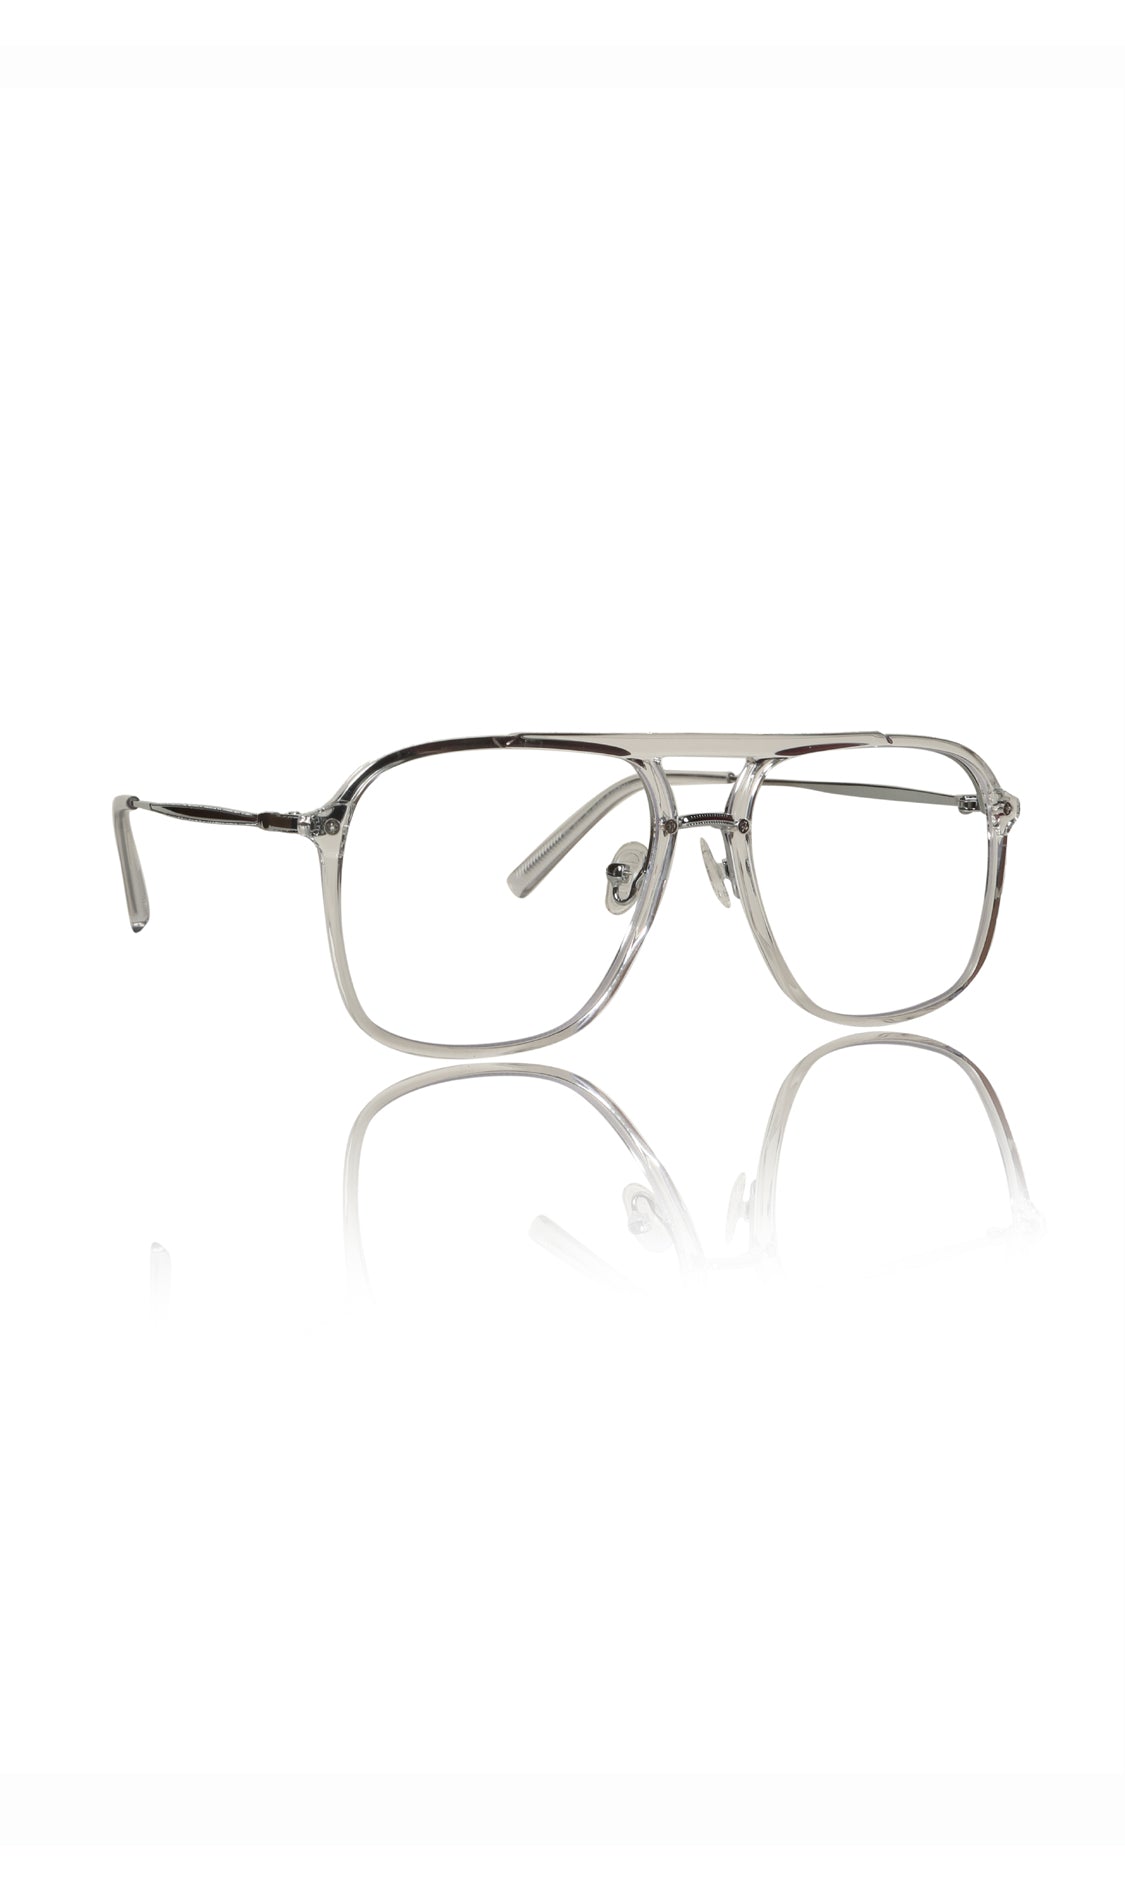 Jodykoes® Premium Series Double Bar Eyewear Eyeglasses Spectacles Frame for Men and Women (Transparent)